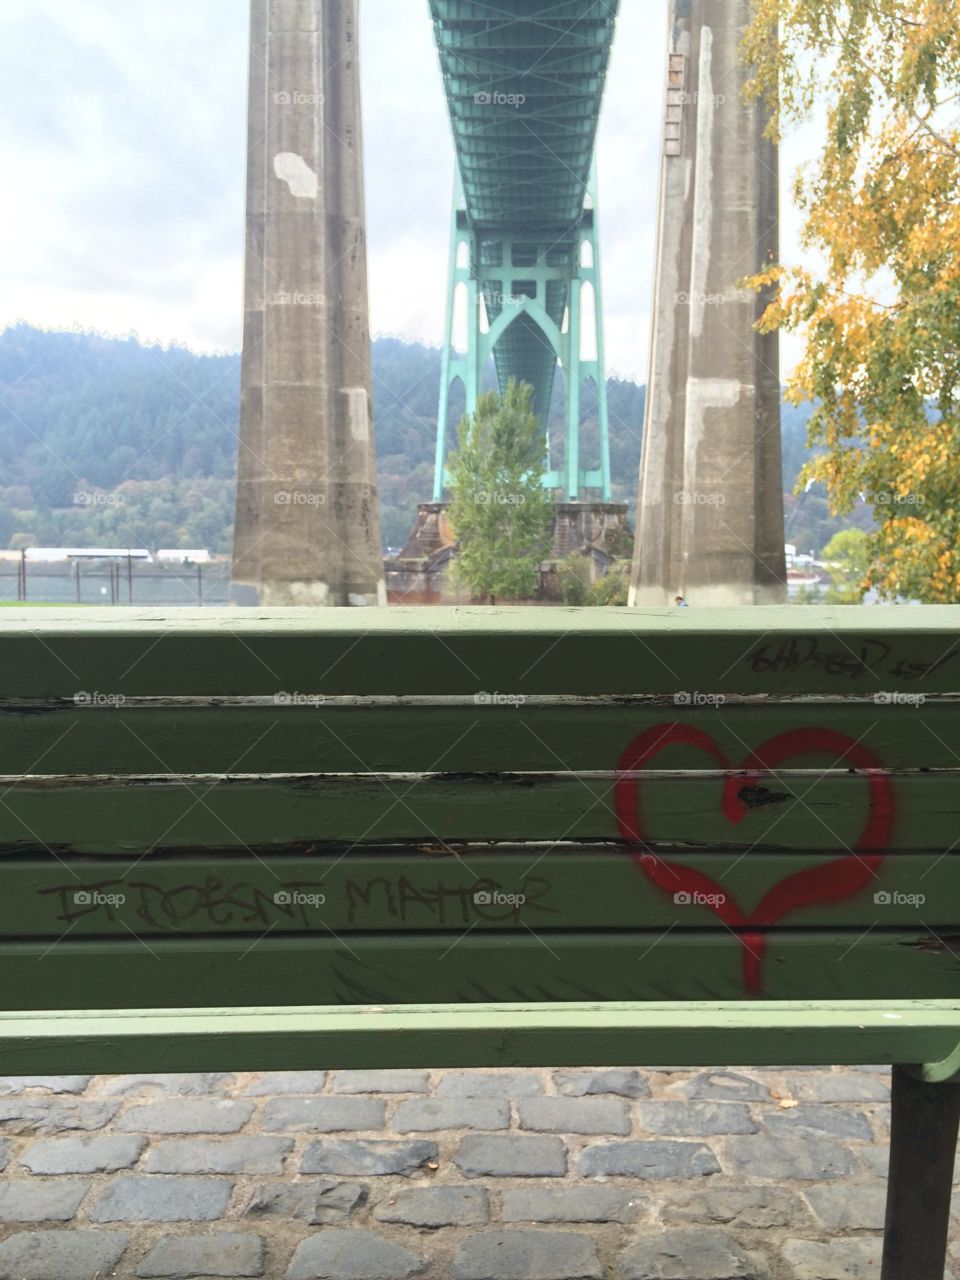 A bench with graffiti on it underneath St. John's Bridge in Portland, Oregon.